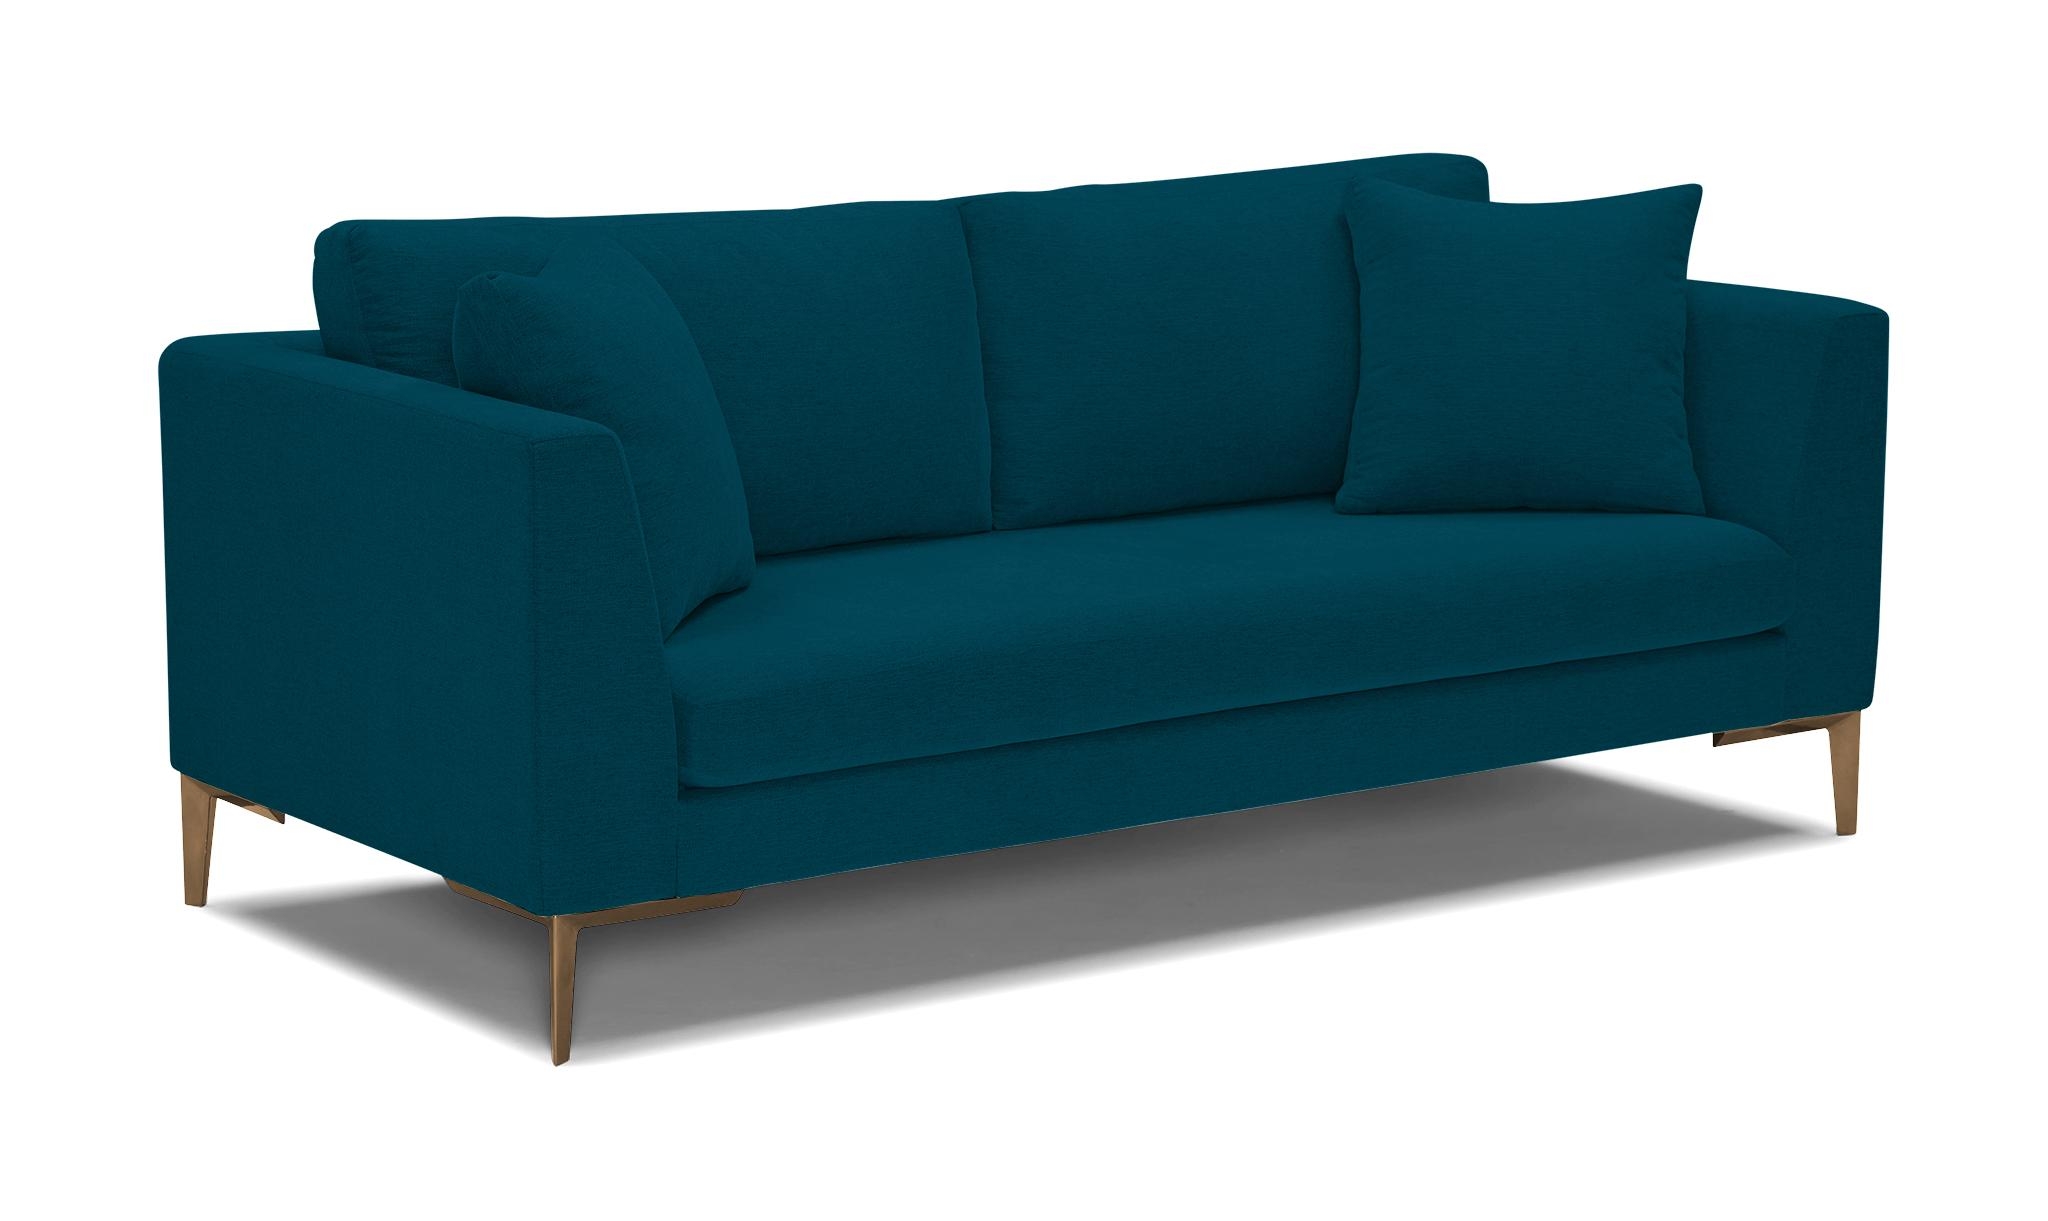 Blue Ainsley Mid Century Modern Sofa - Key Largo Zenith Teal - Image 1